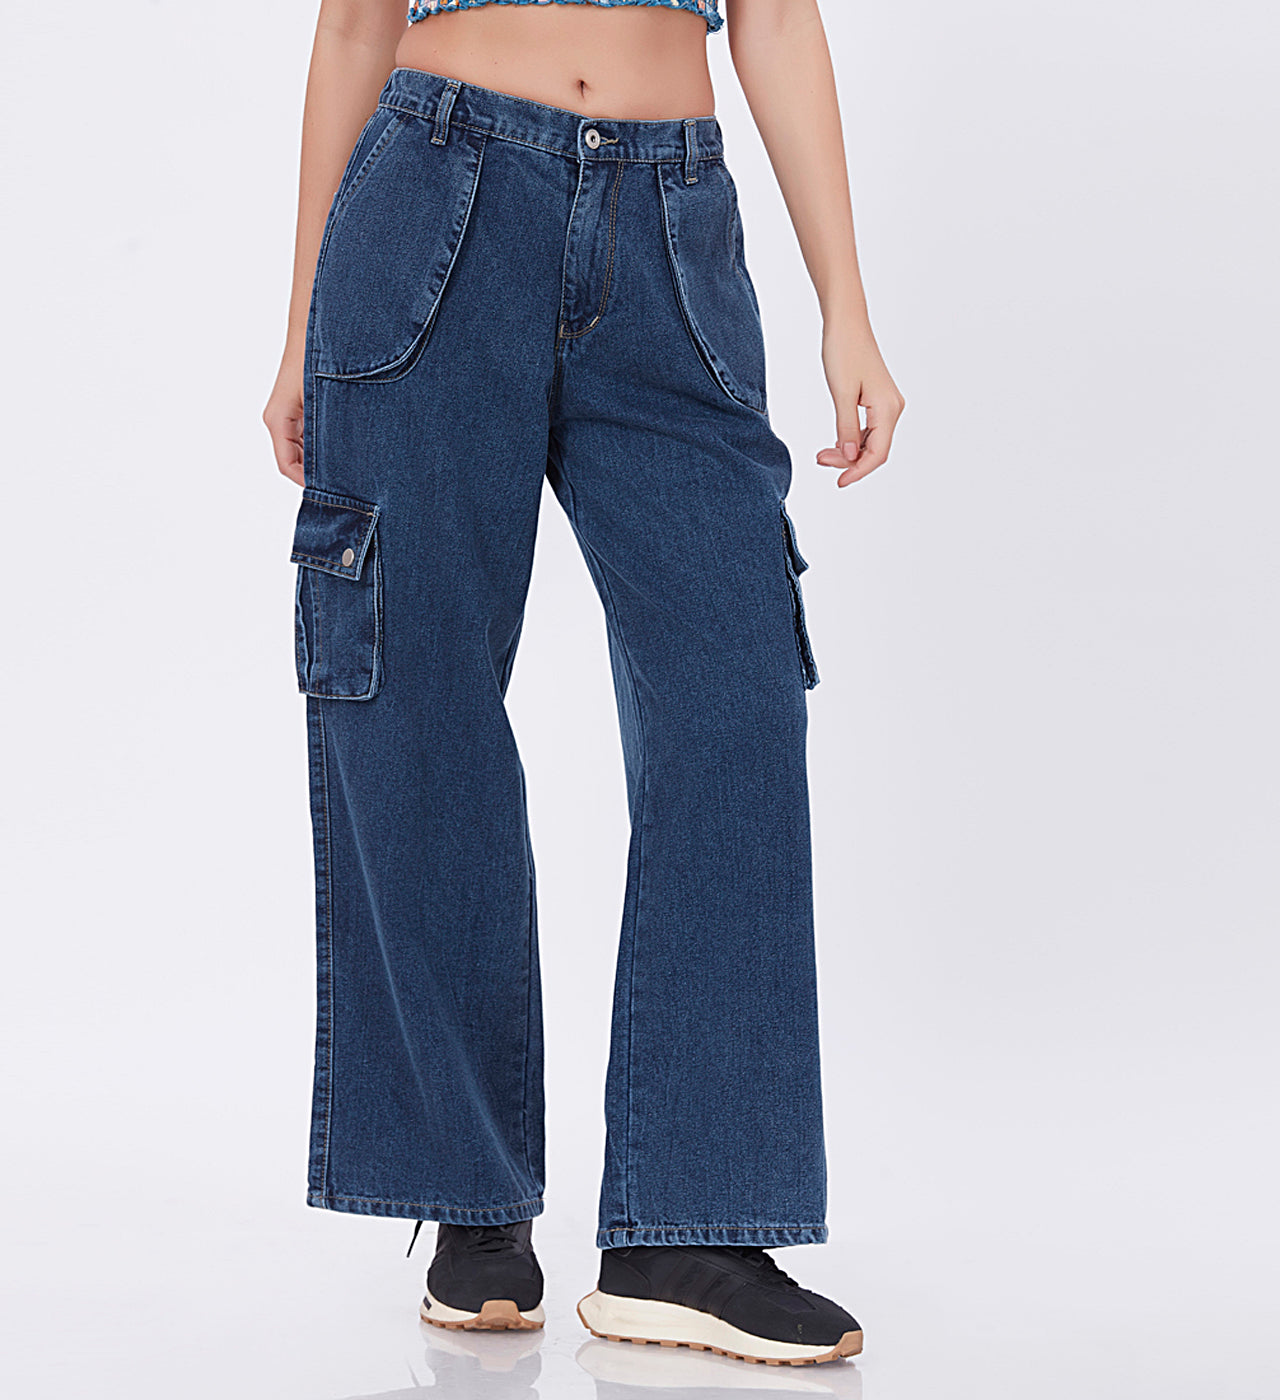 Blum Denim Women's (1803) Blue Straight Fit High-Waist Cargo: Stretchable Knitted Denim Jeans for Urban Chic